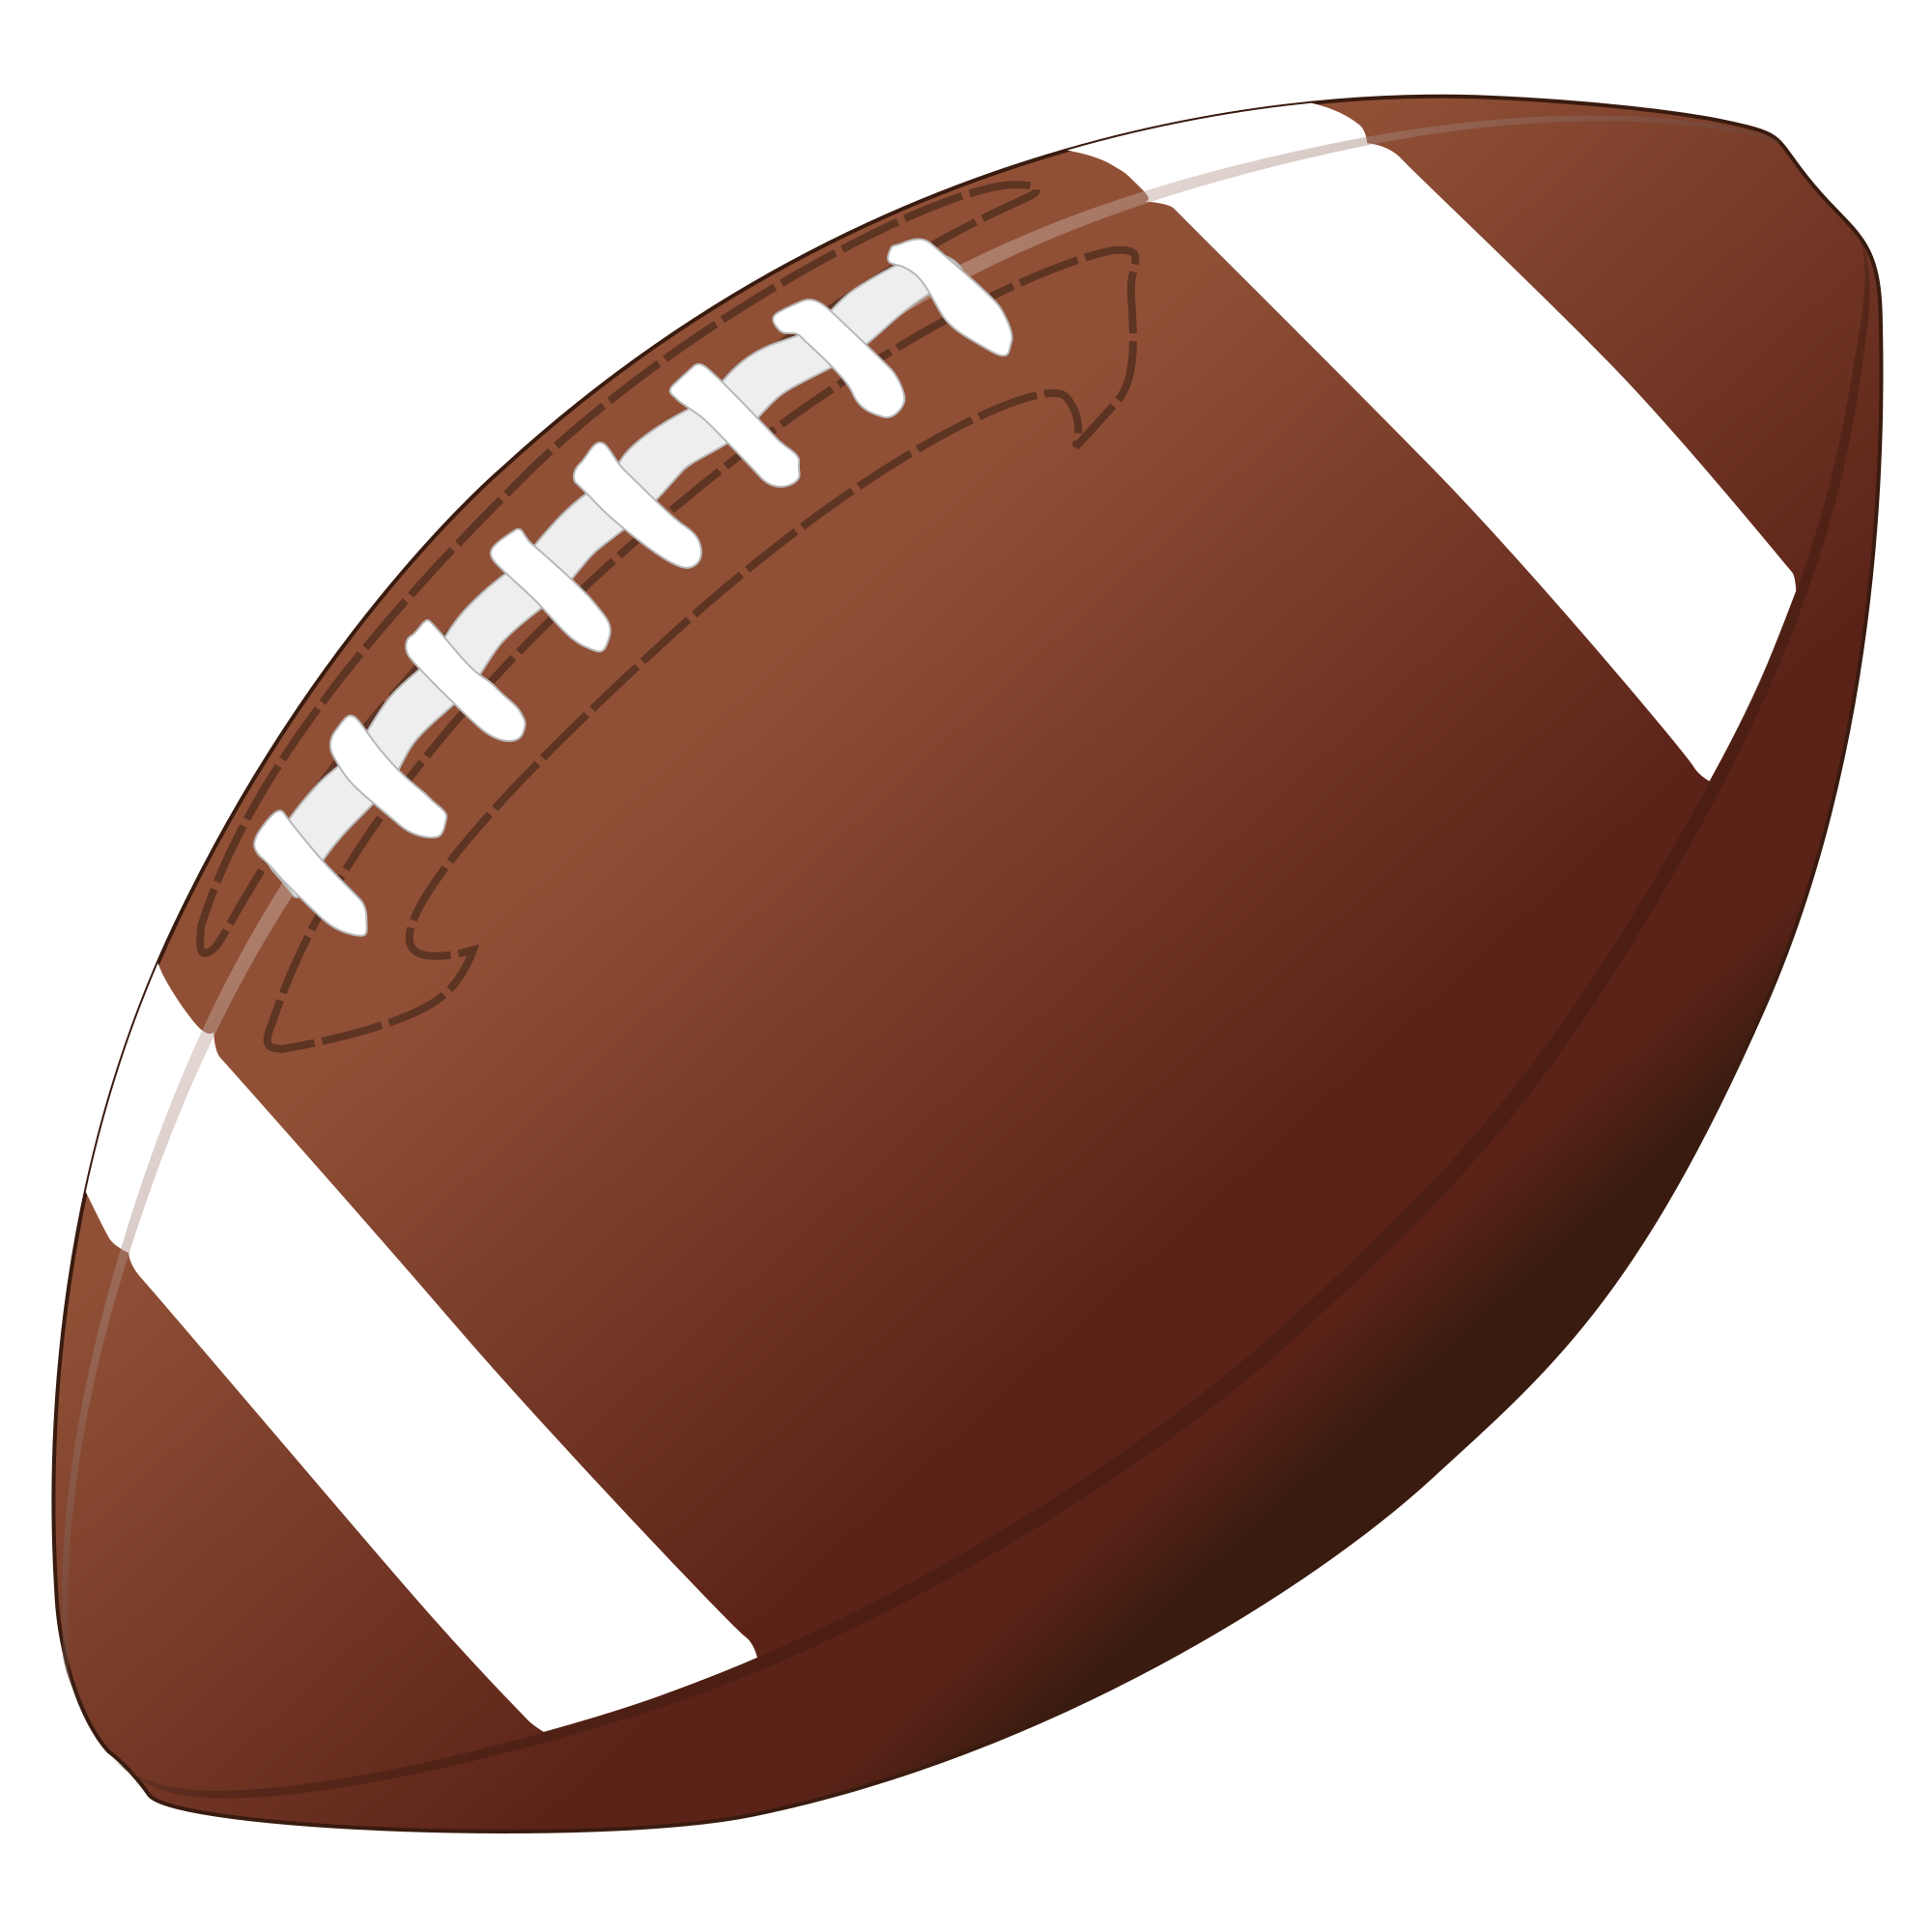 File:American football.svg - Wikimedia Commons